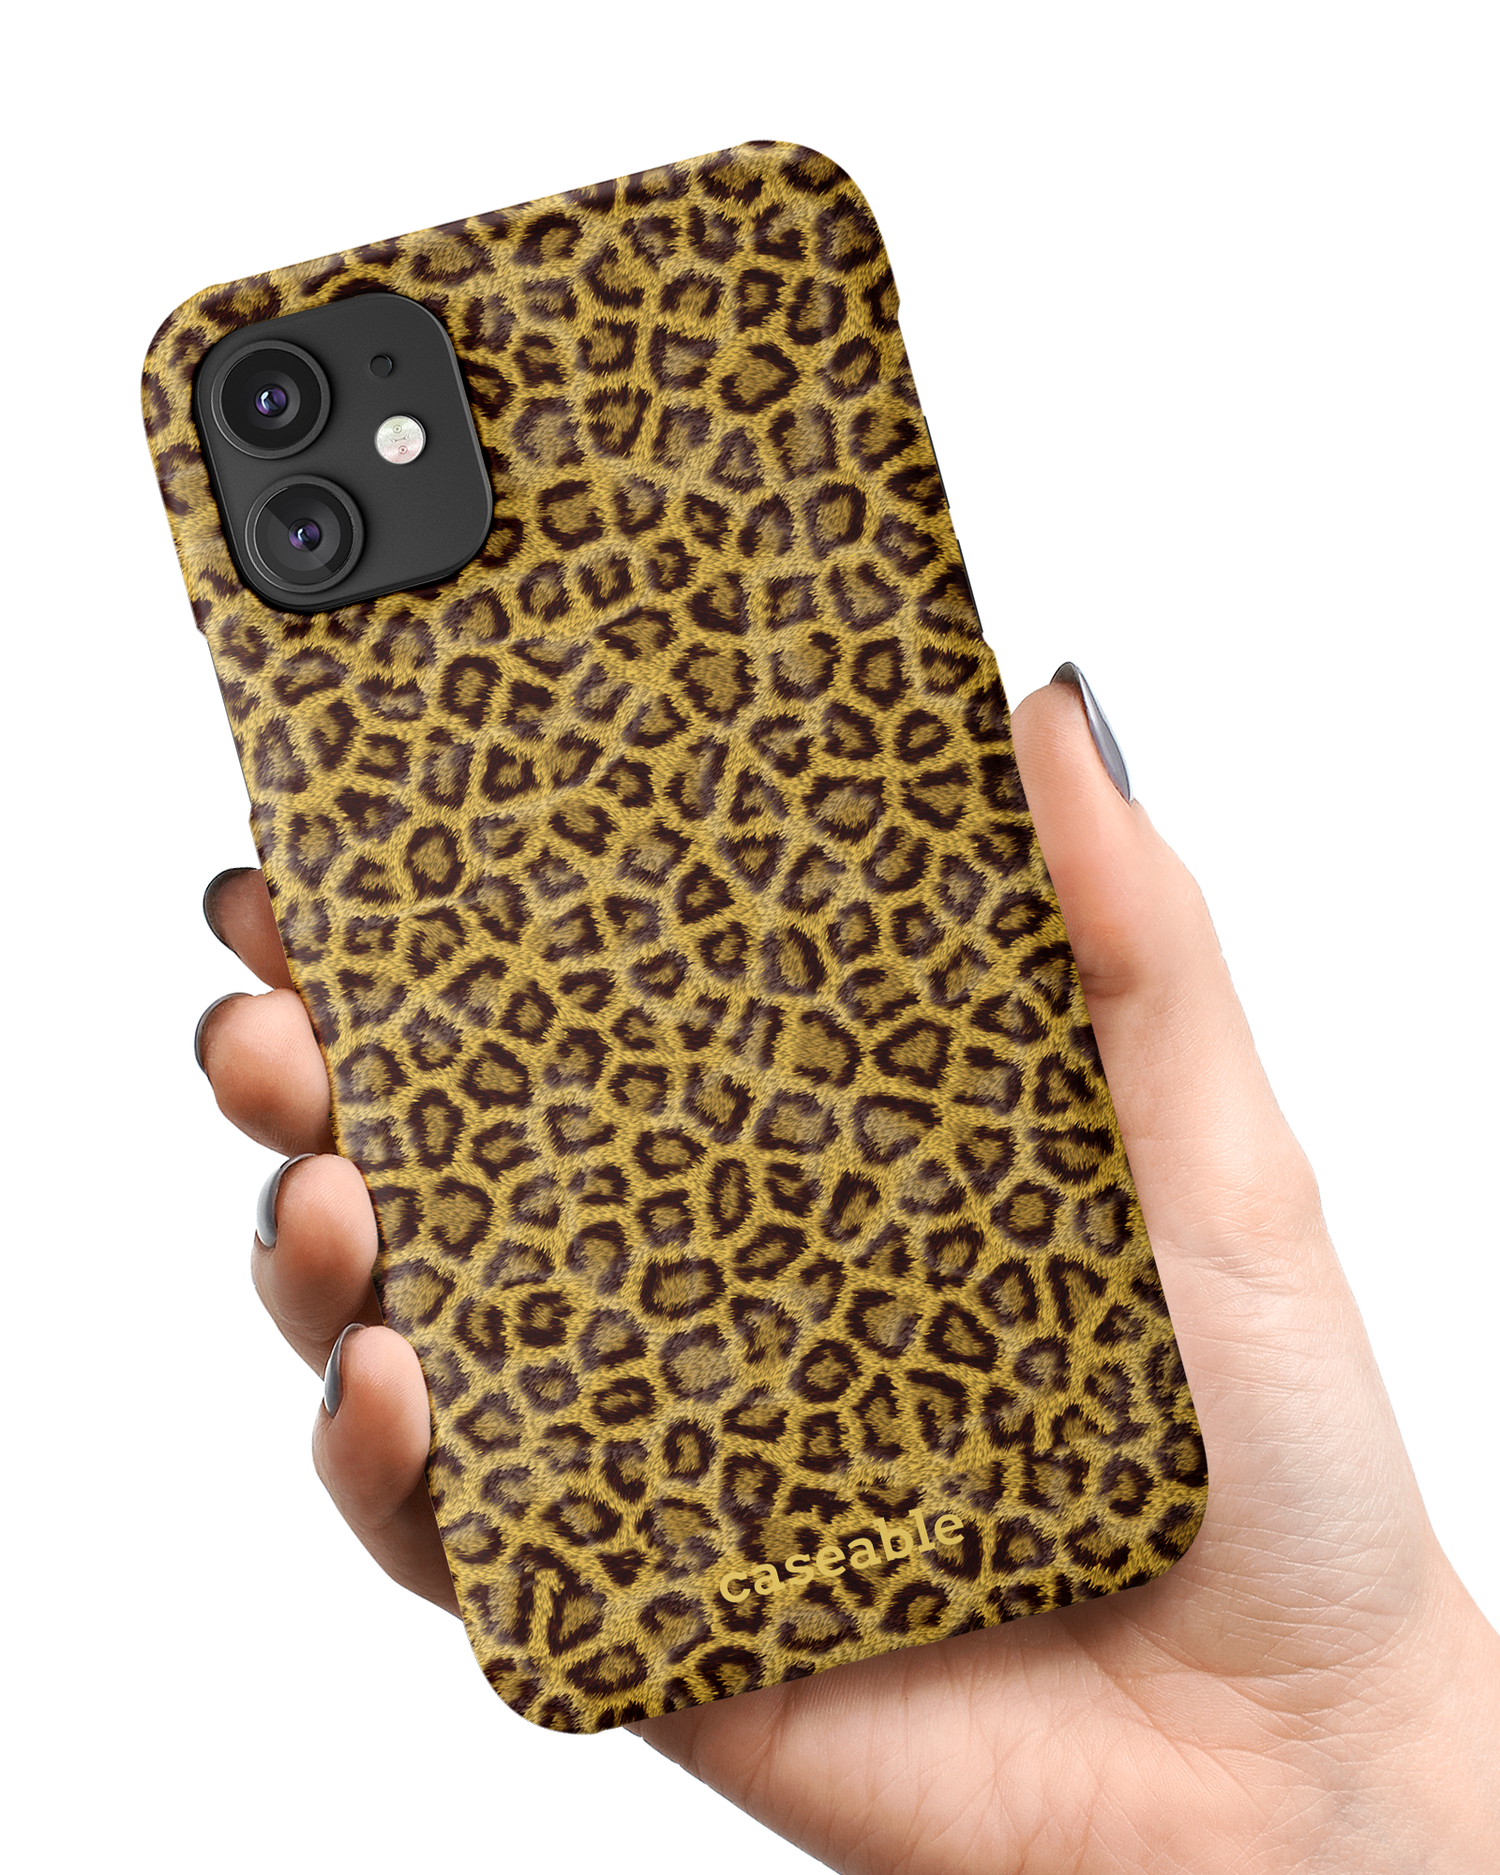 Leopard Skin Hard Shell Phone Case Apple iPhone 11 held in hand